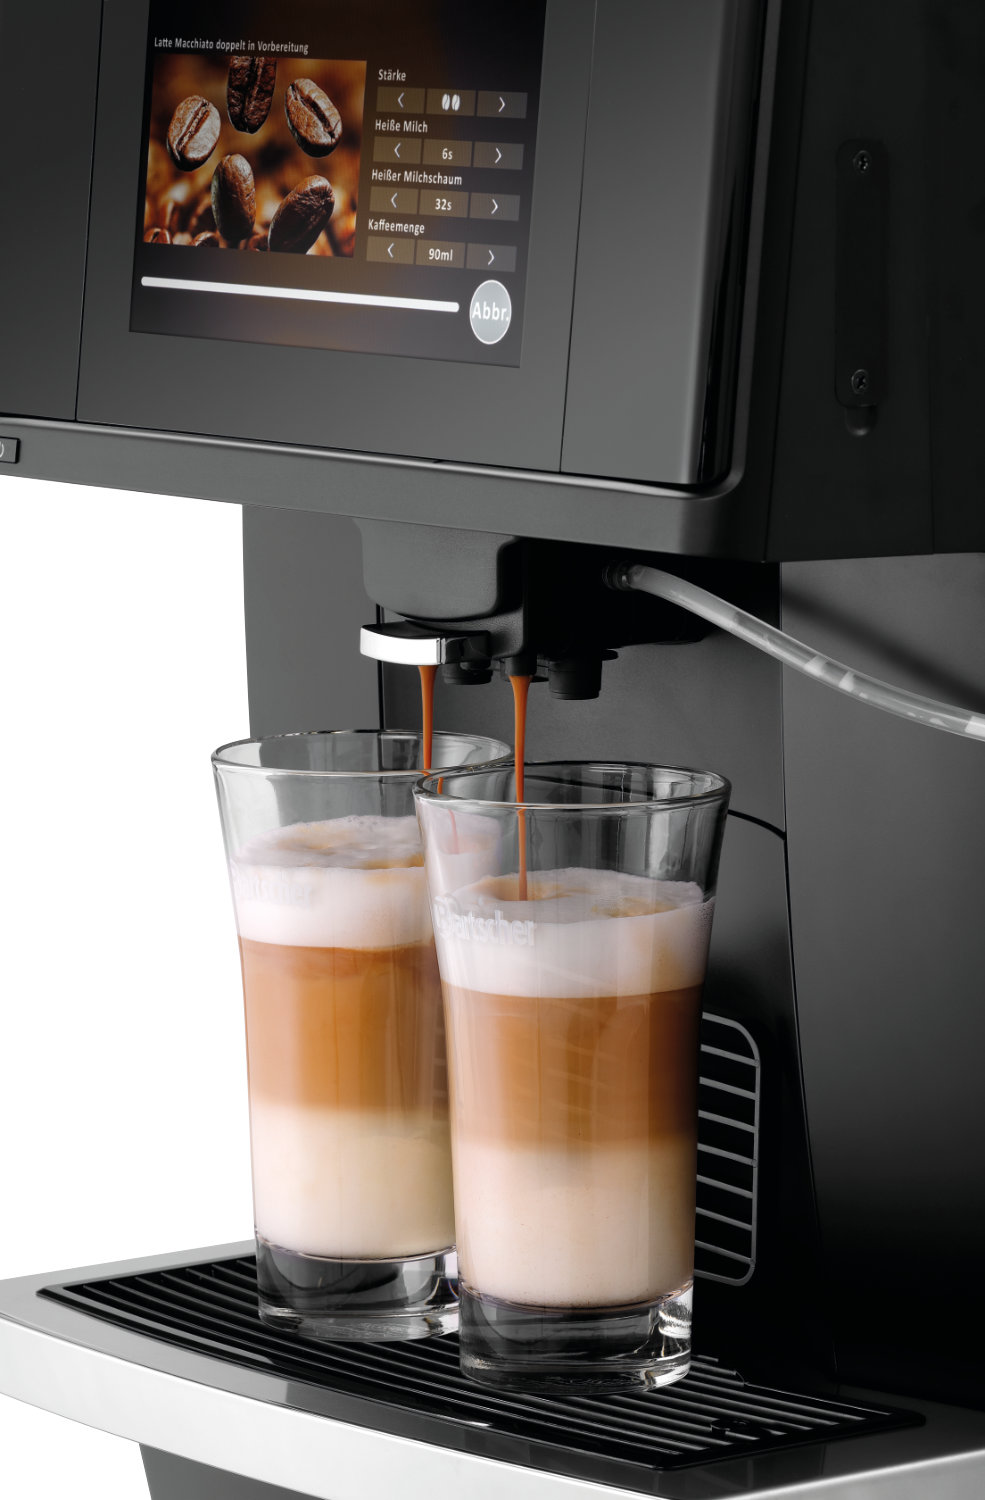  Bartscher Kaffeevollautomat KV1 Comfort 